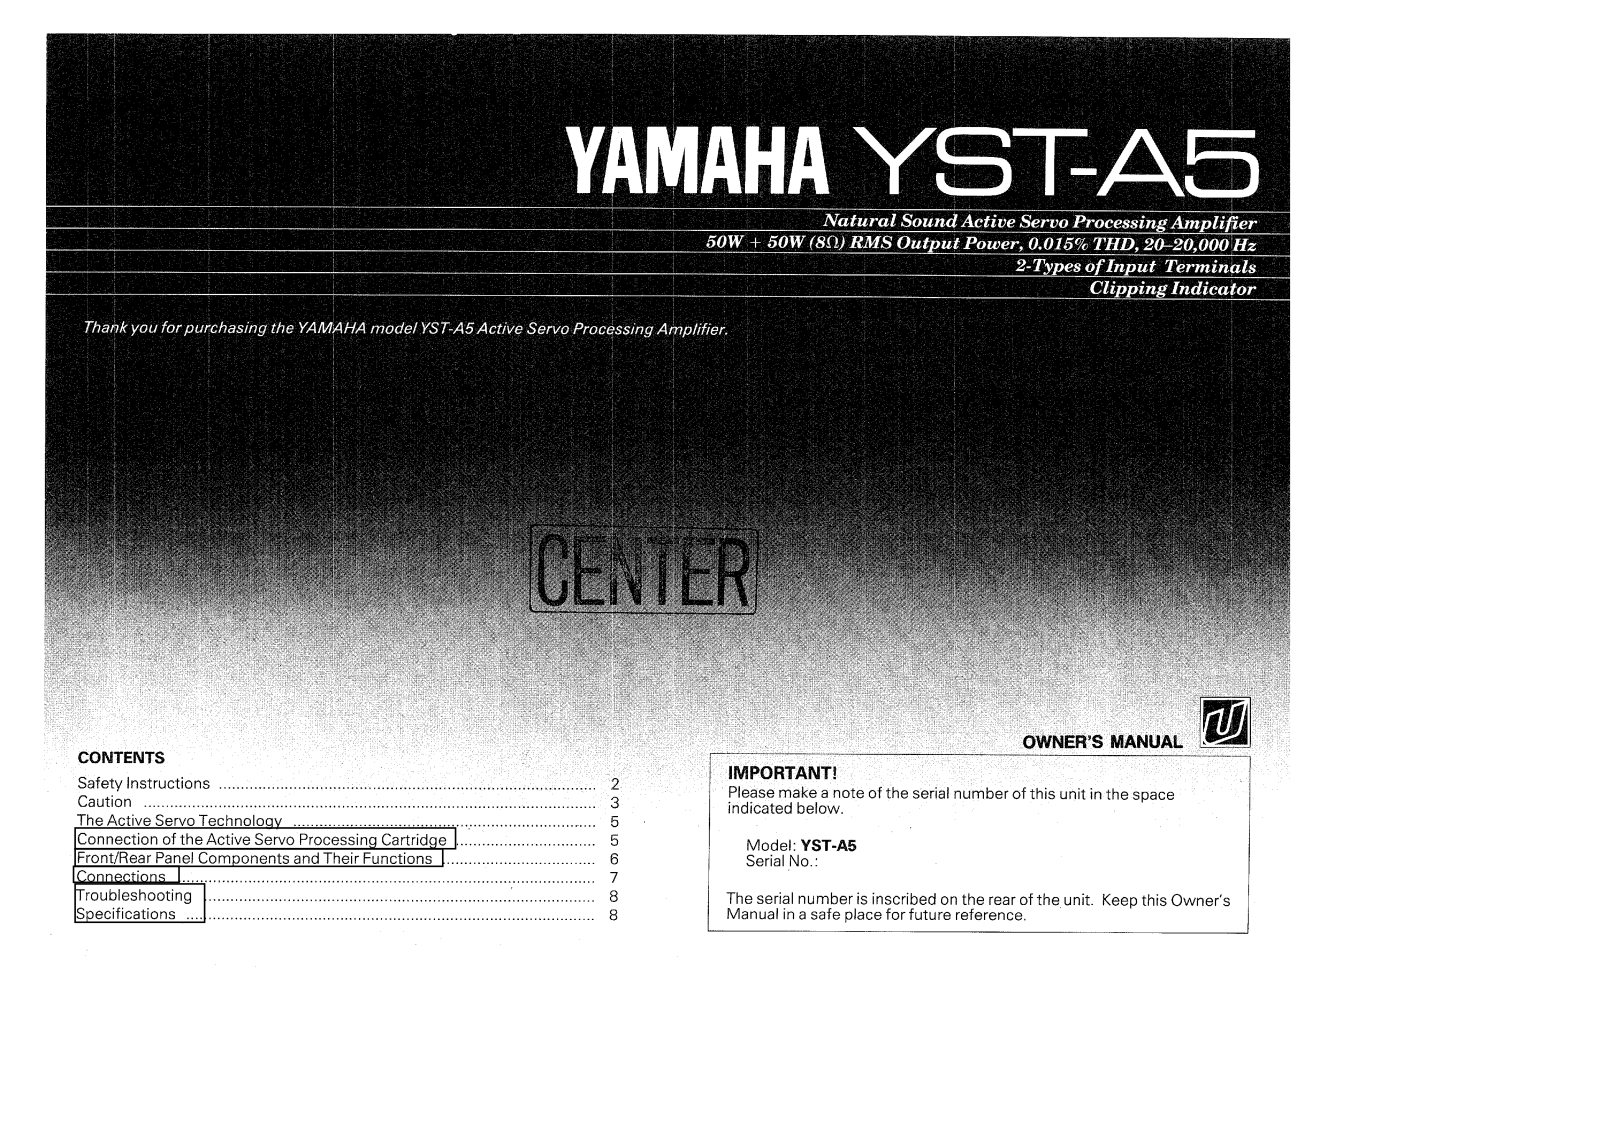 Yamaha YSTA-5 Owners manual